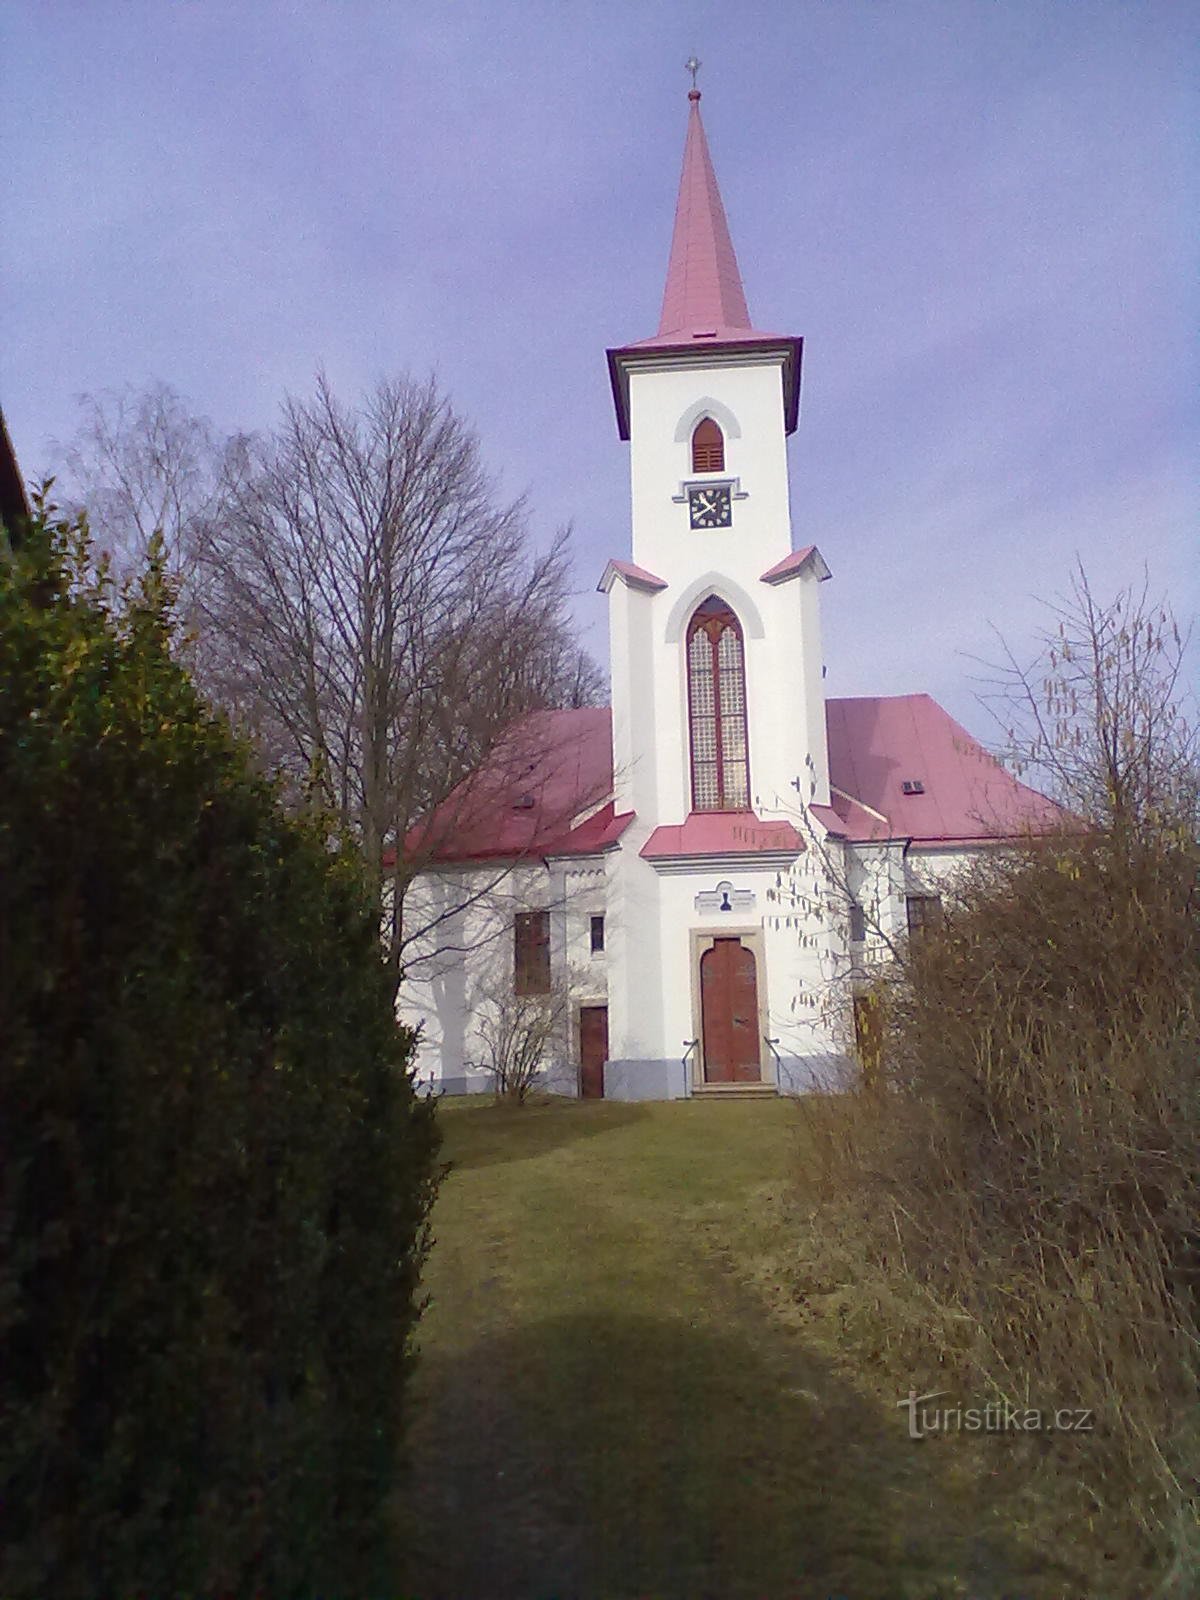 2. Biserica evanghelică din Moravč din 1785.